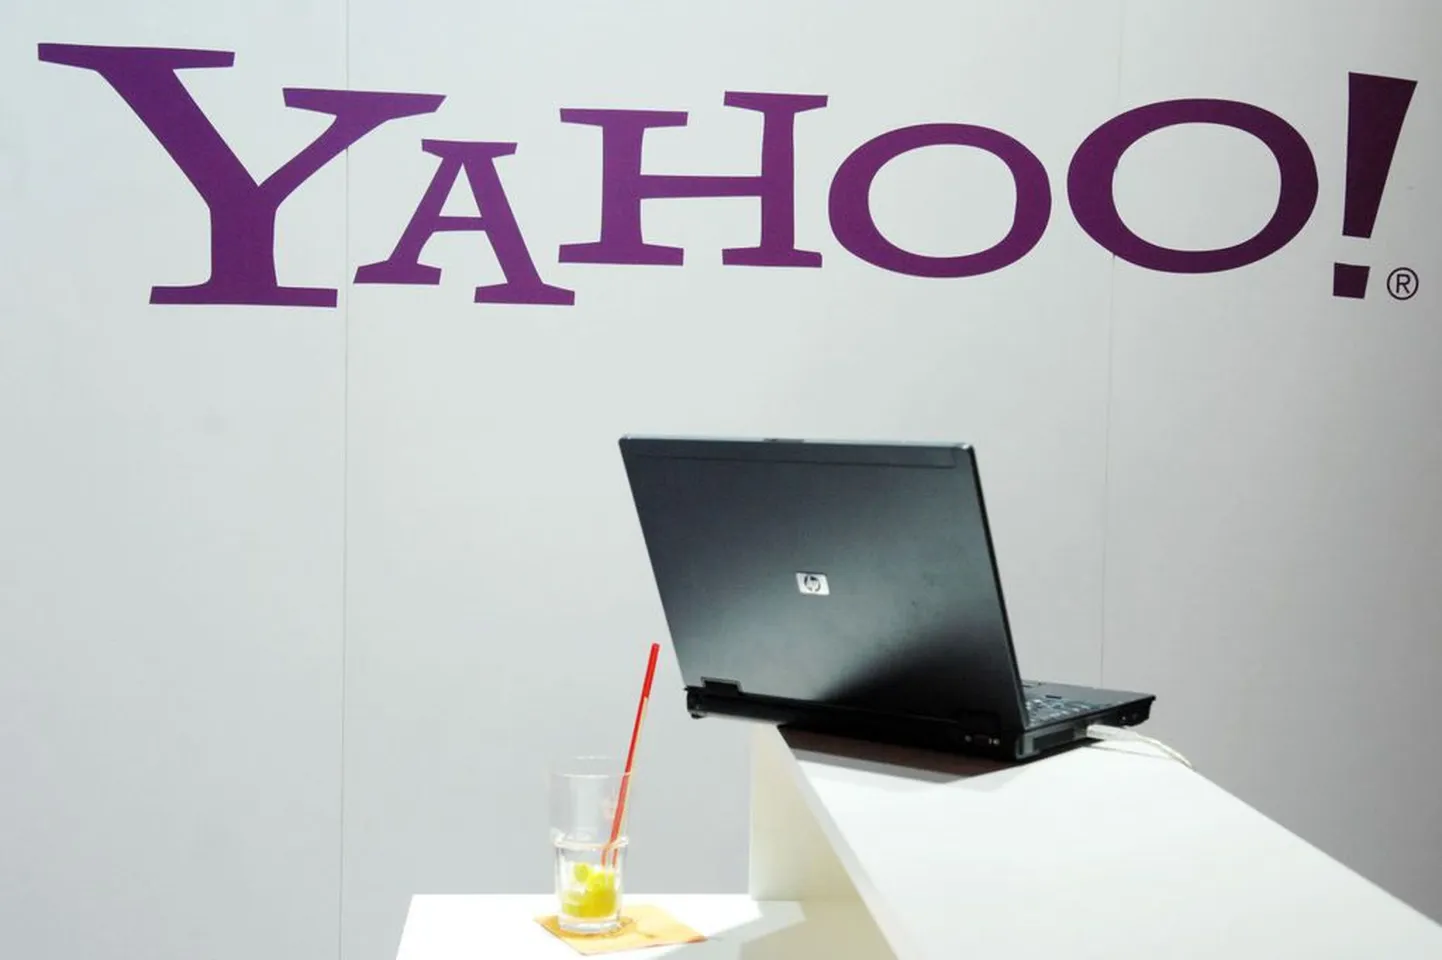 Офис  Yahoo!. Иллюстративное фото.